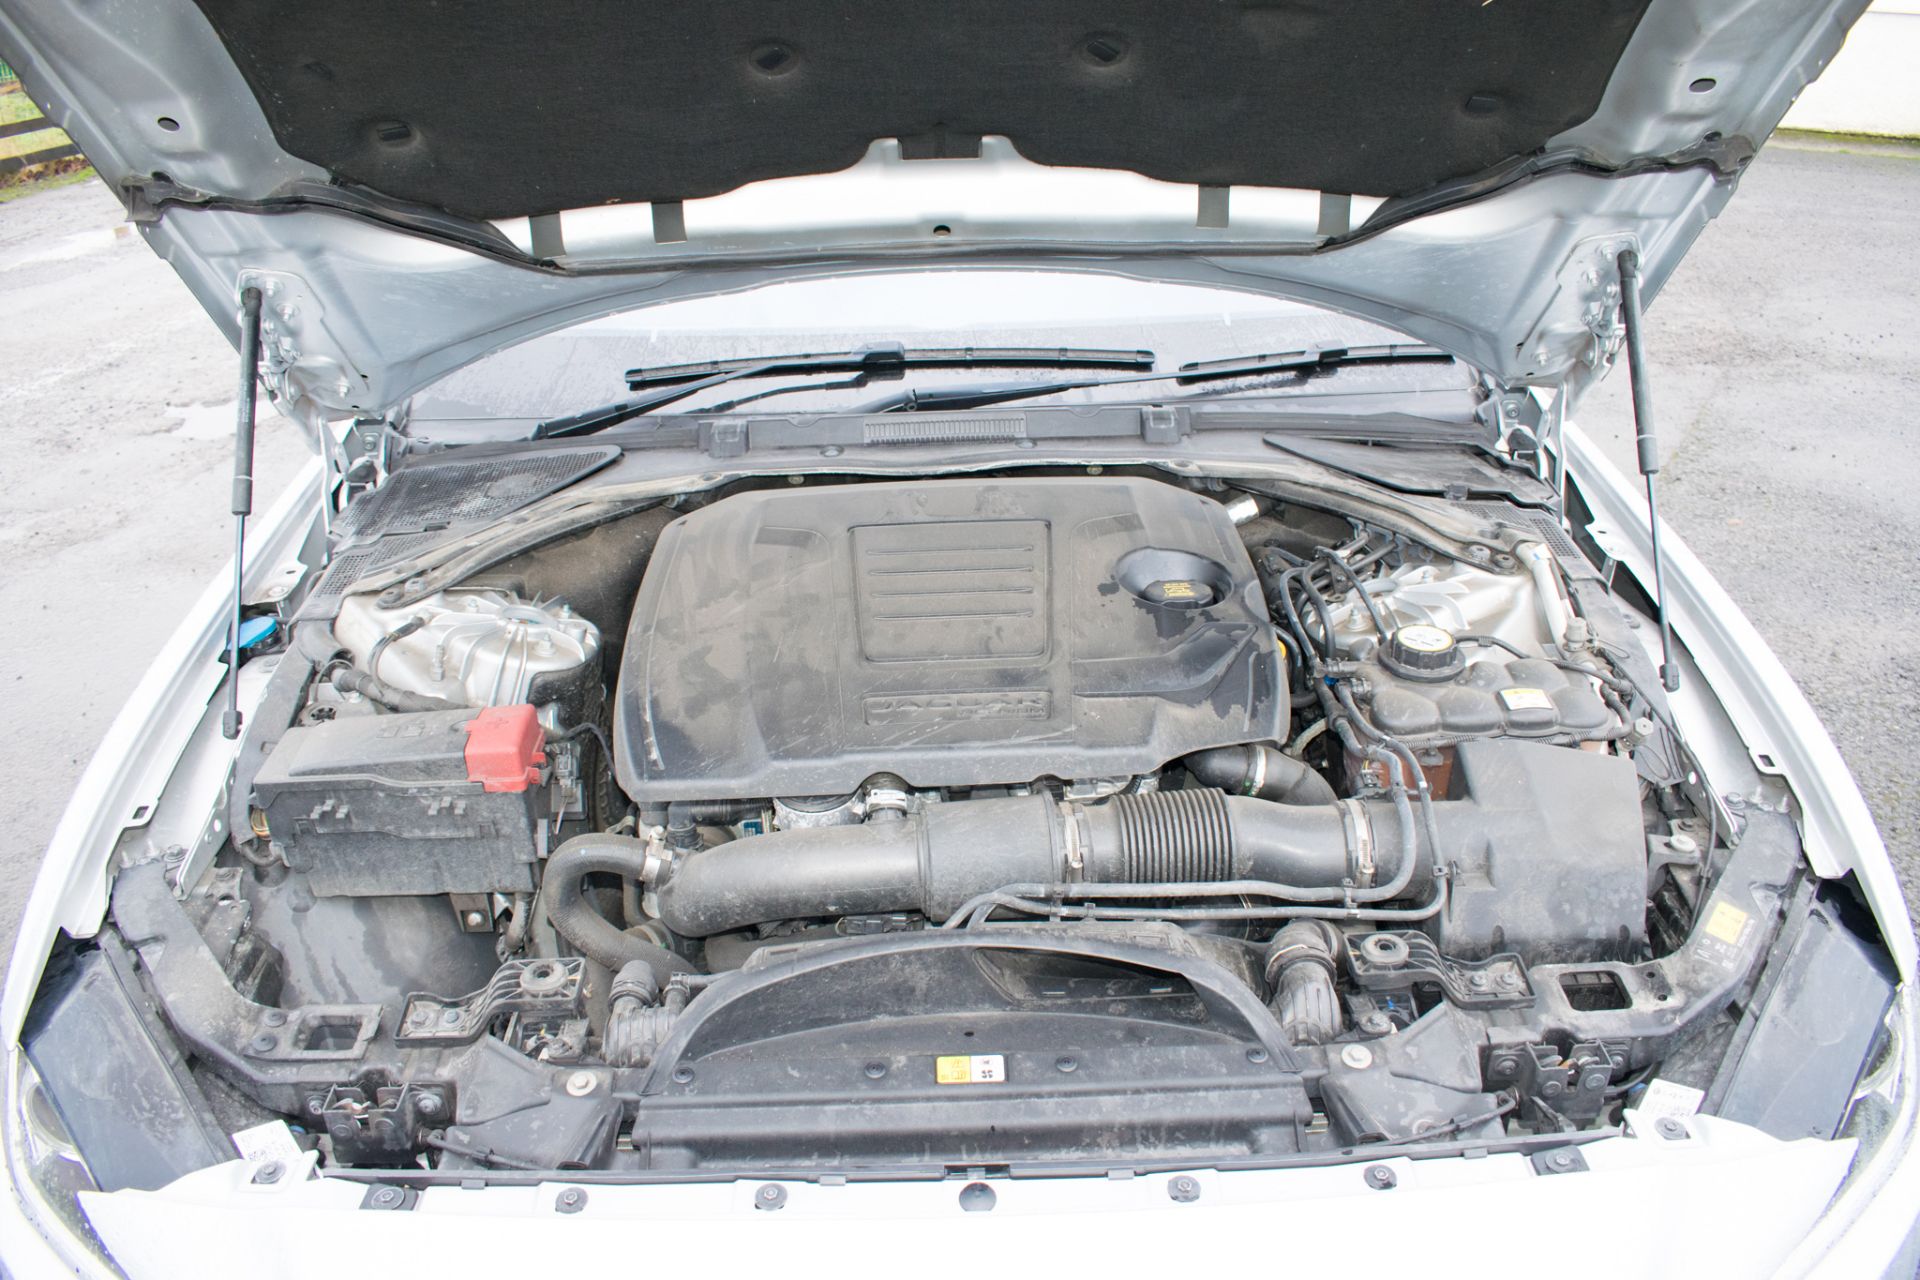 Jaguar XE Portfolio 2.0 litre petrol automatic 4 door saloon car Registration number: AV67 RPY - Image 23 of 23